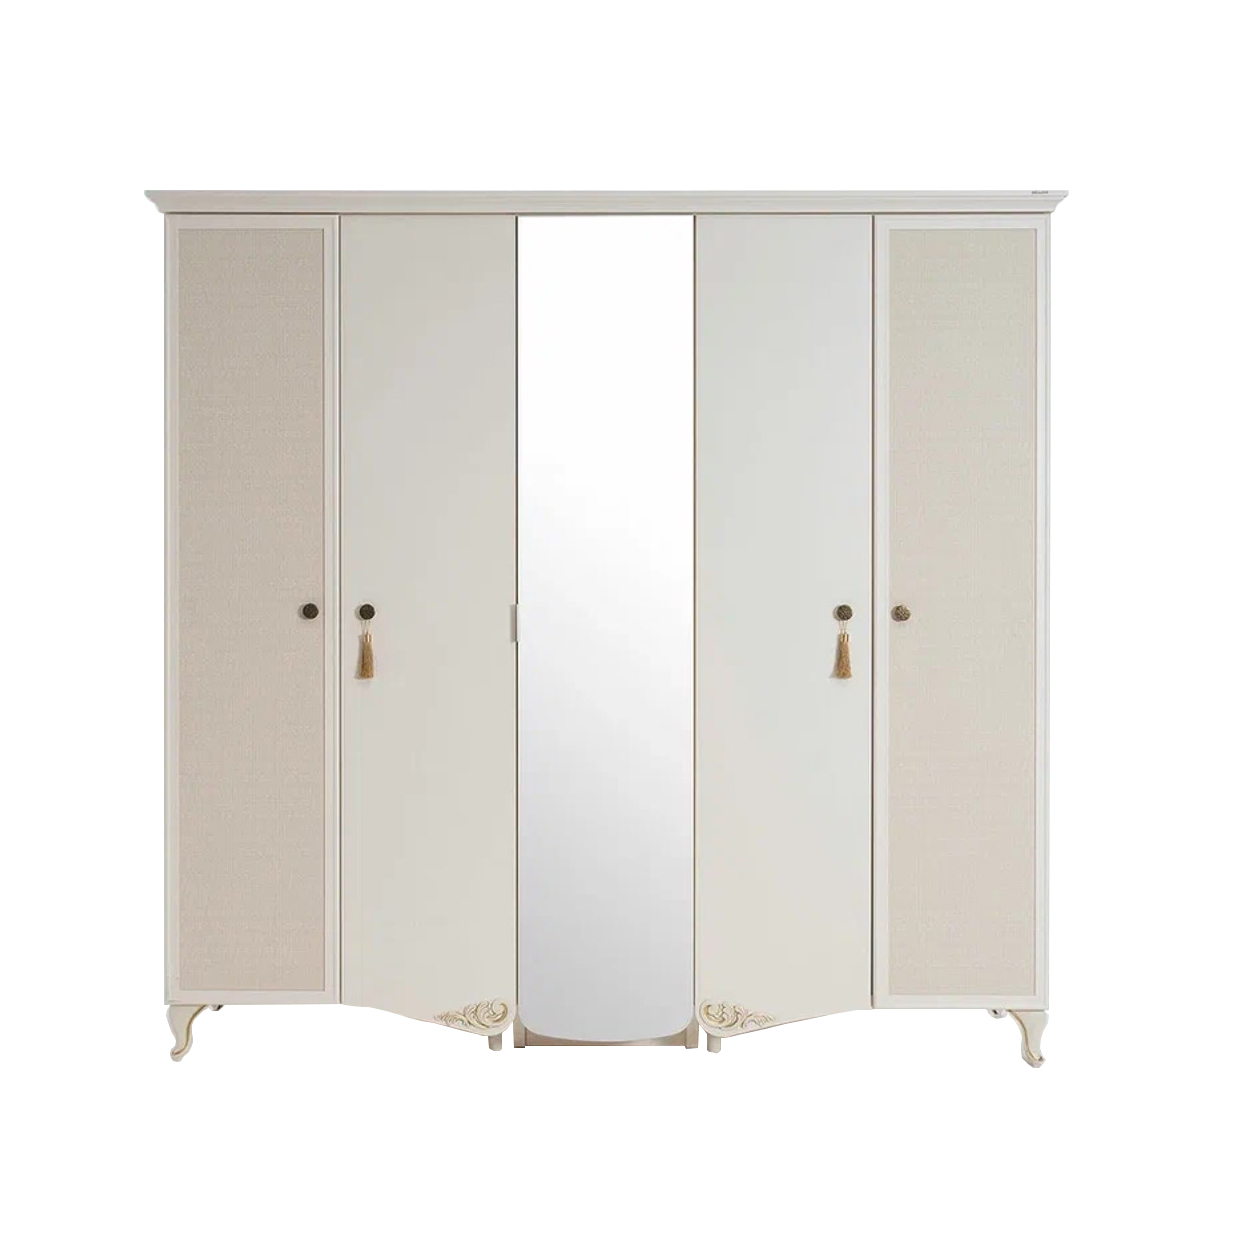 Шкаф Bellona Perlino, пятидверный, цвет: белый, размер 231х63х222 см (PERL-33) остаткиPERL-33